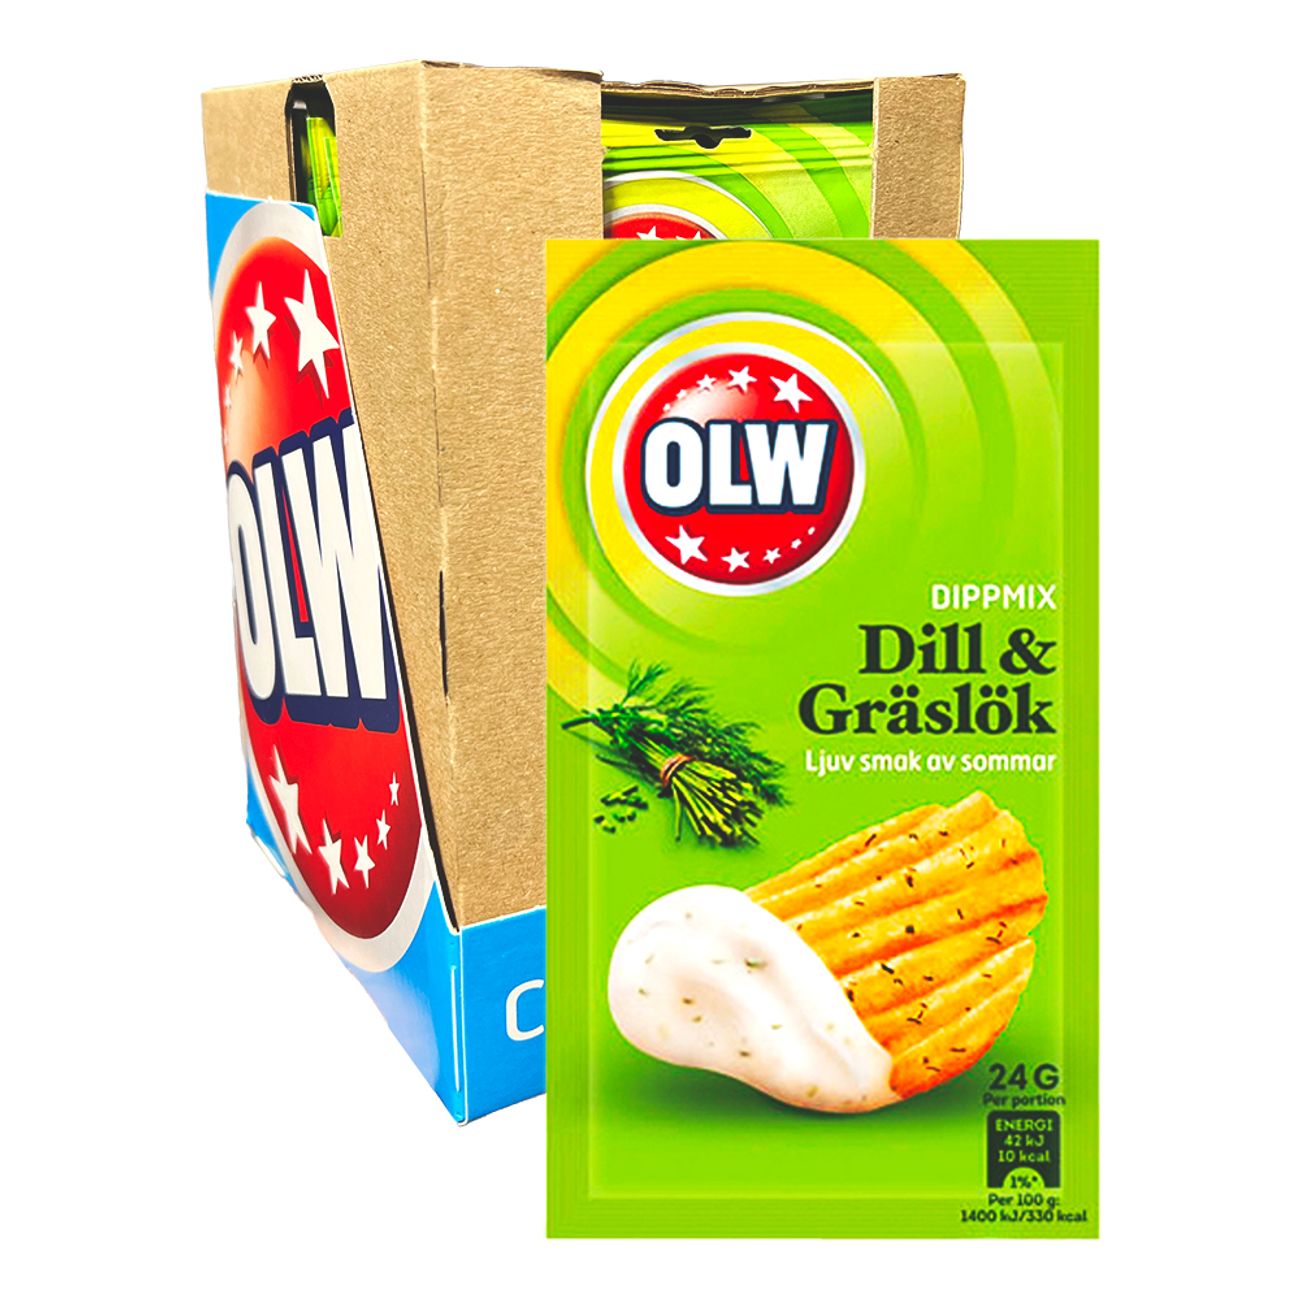 olw-dippmix-dill-graslok-storpack-50038-2